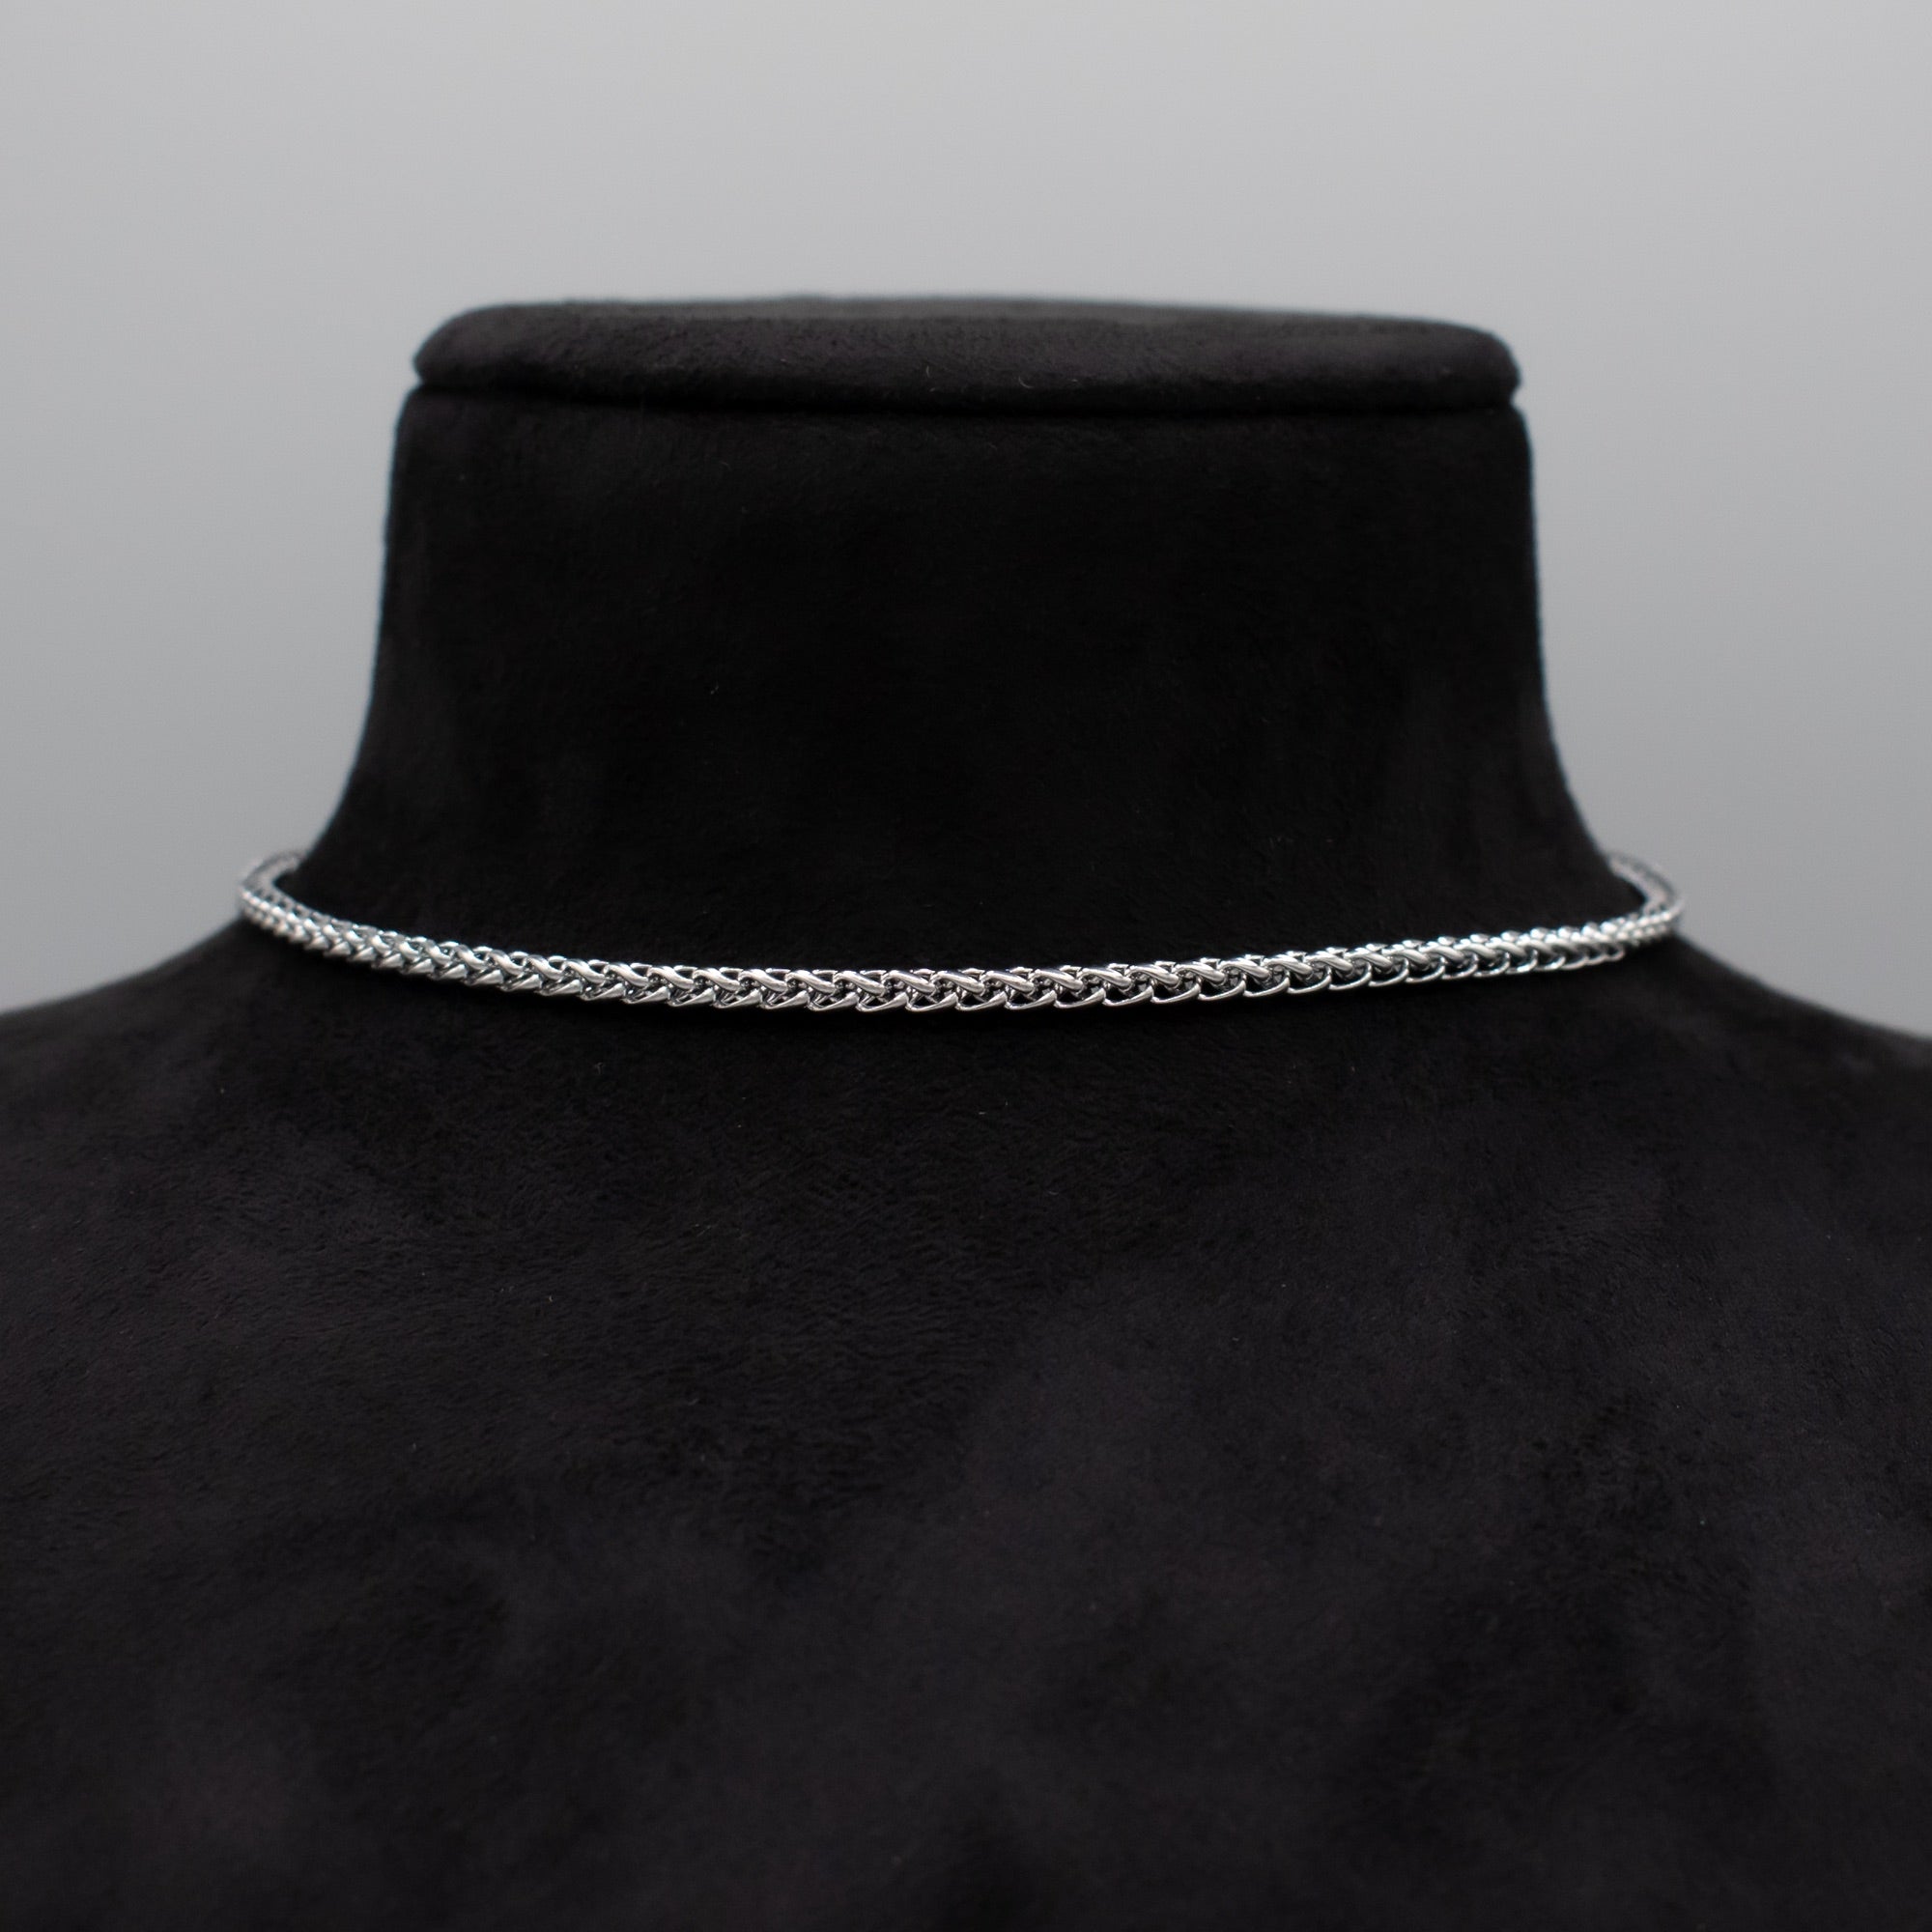 3mm wheat chain choker necklace